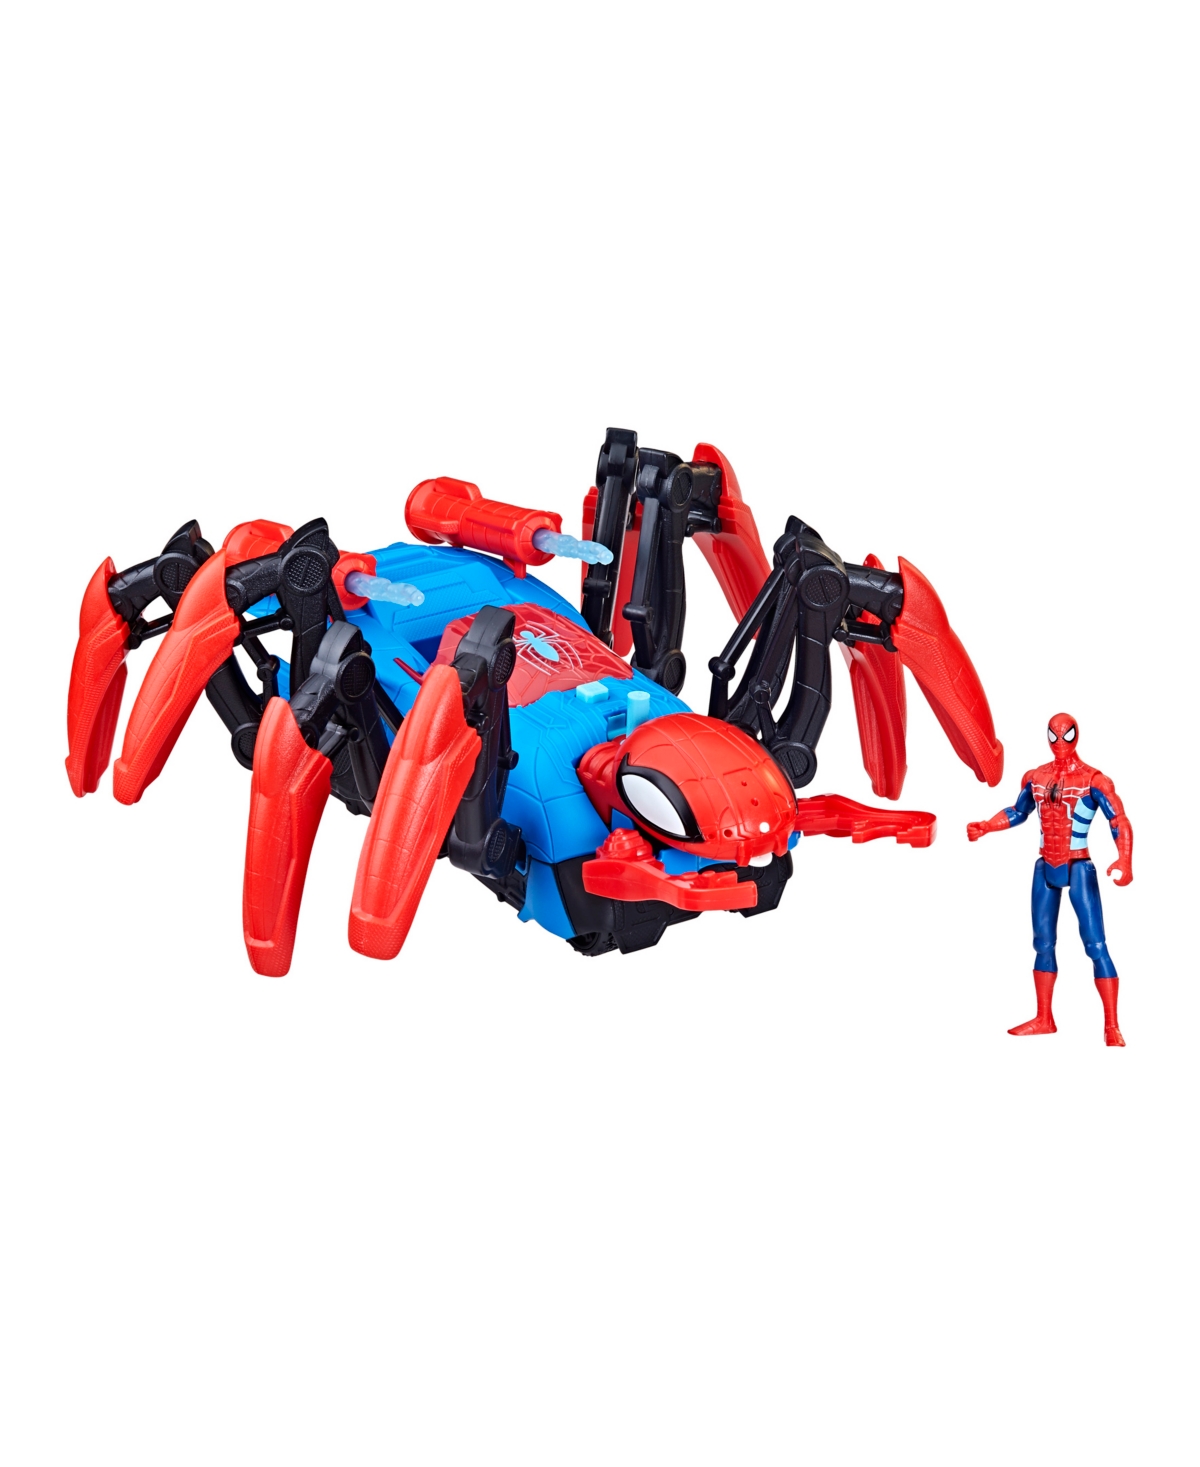 Spider-man Marvel Crawl 'n Blast Spider In No Color